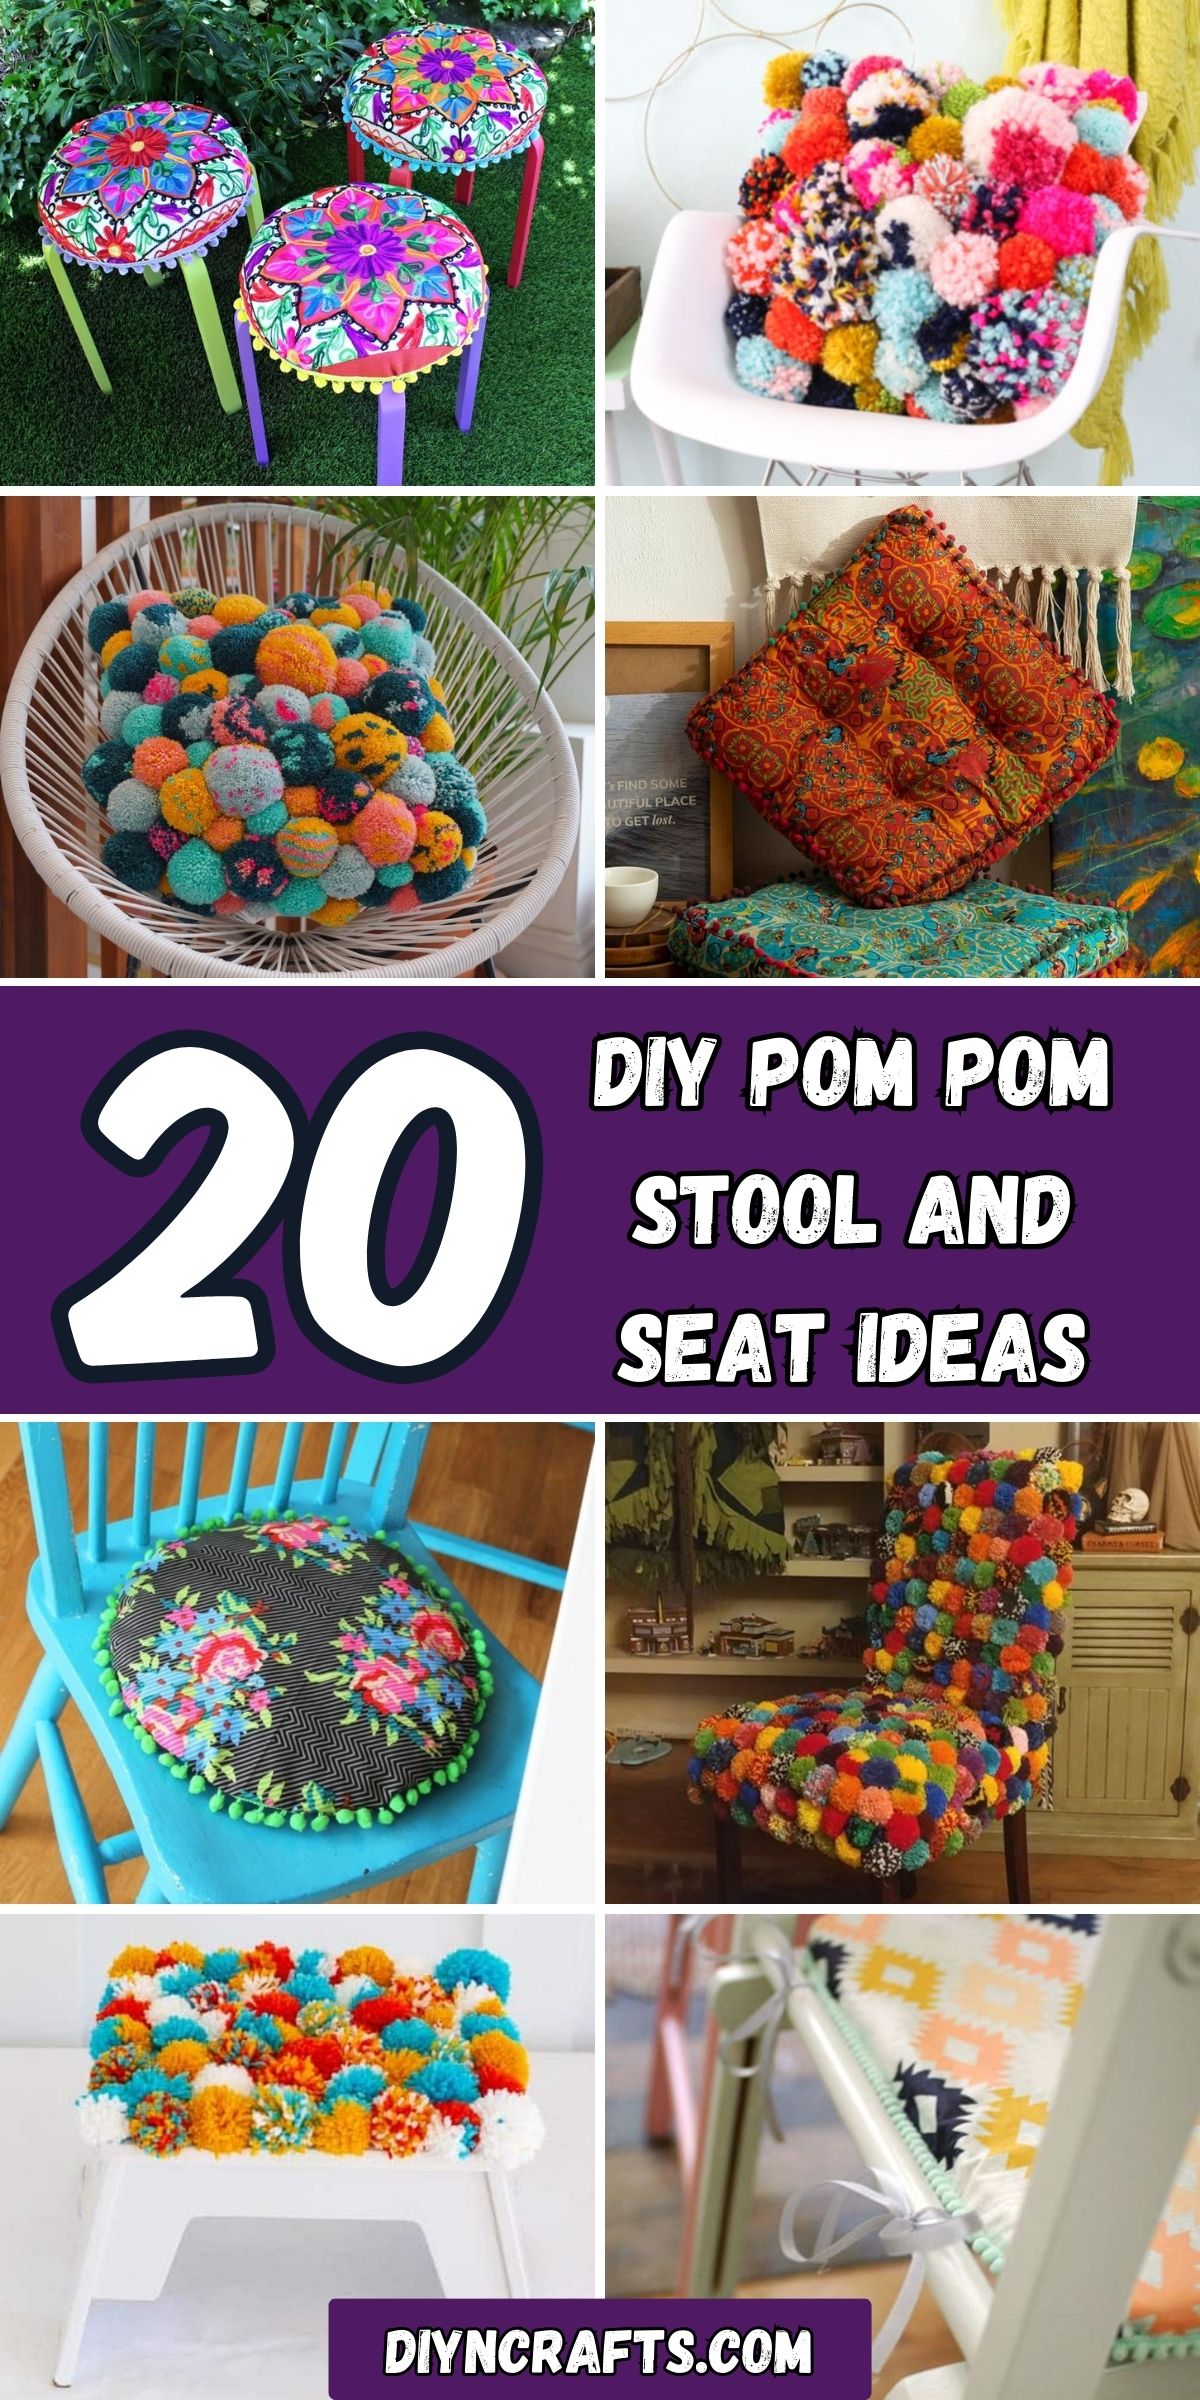 20 DIY Pom Pom Stool and Seat Ideas collage.